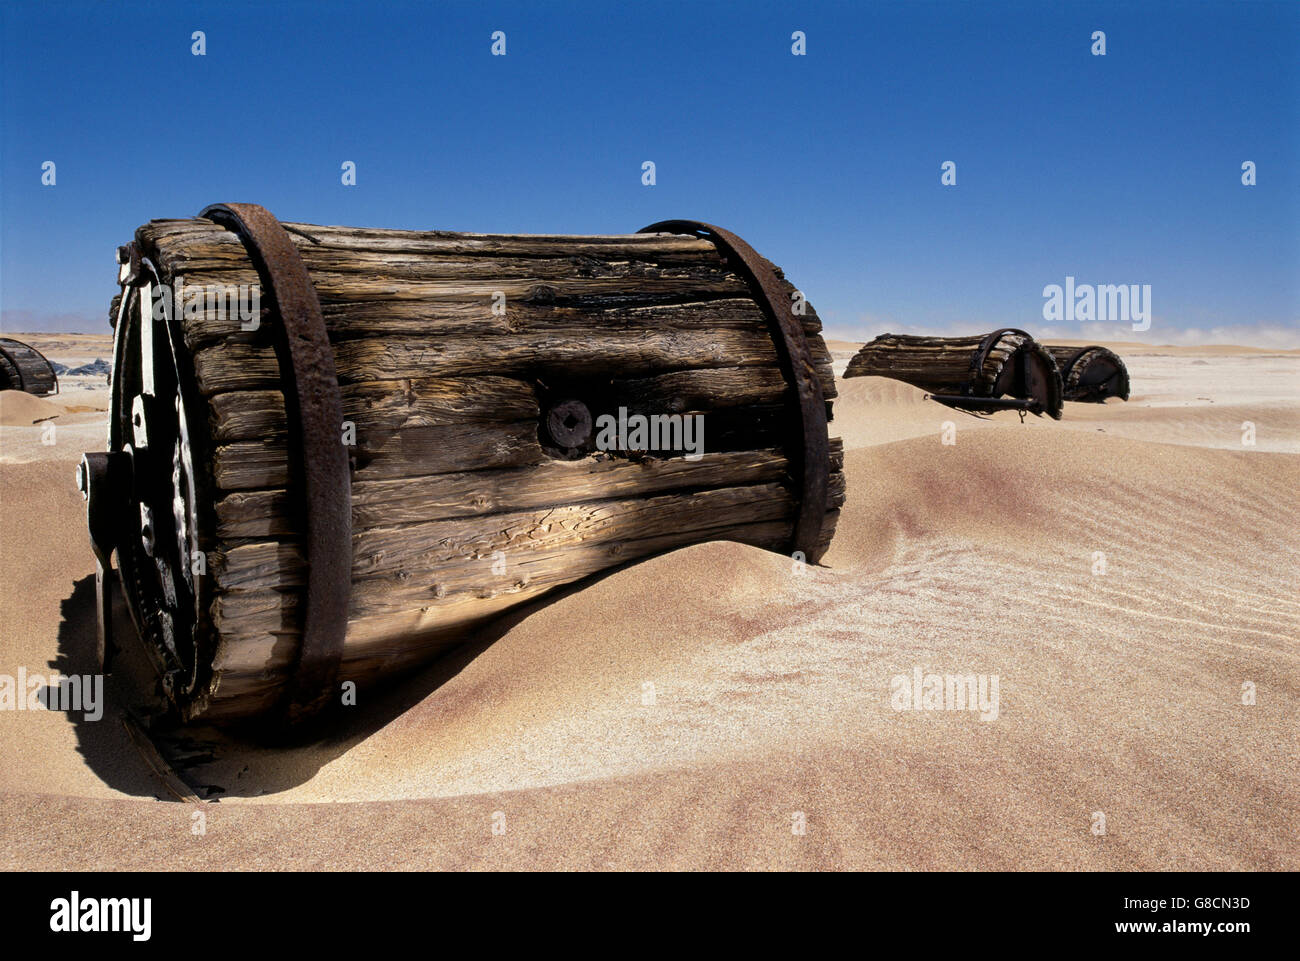 Old diamond industry water barrels, Namib Desert, Namibia. Stock Photo